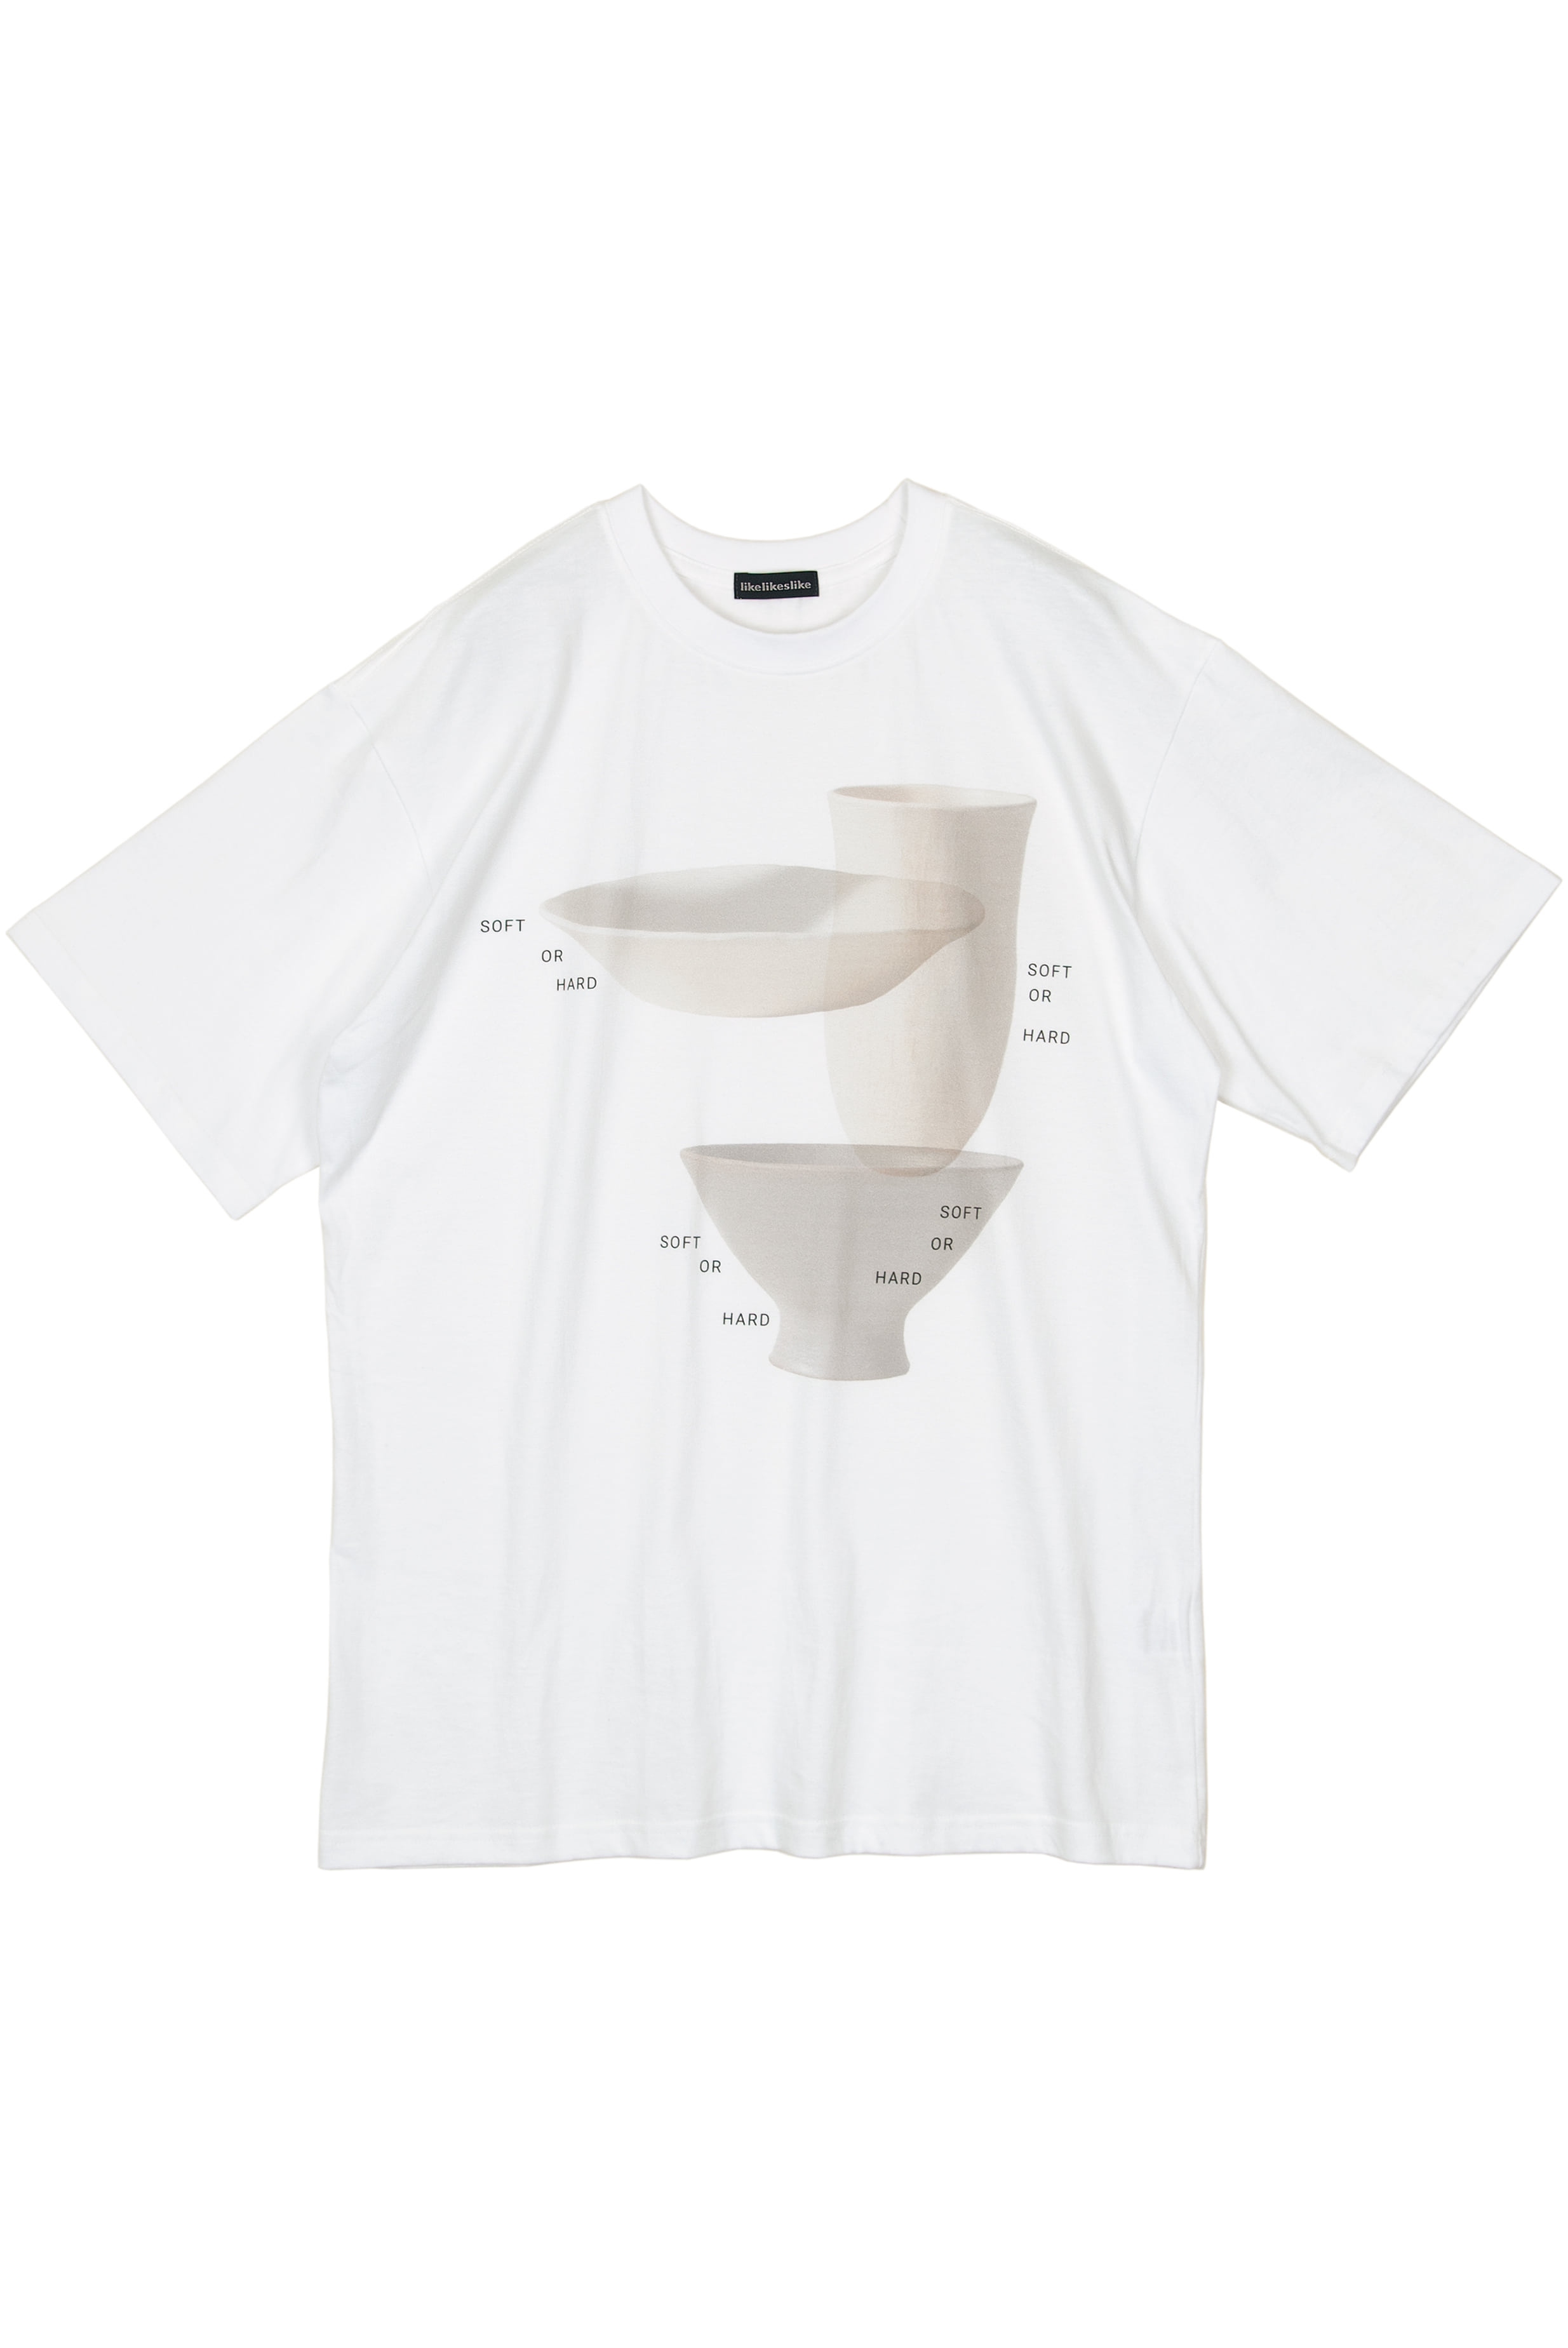 t-shirt, wave ceramics, white